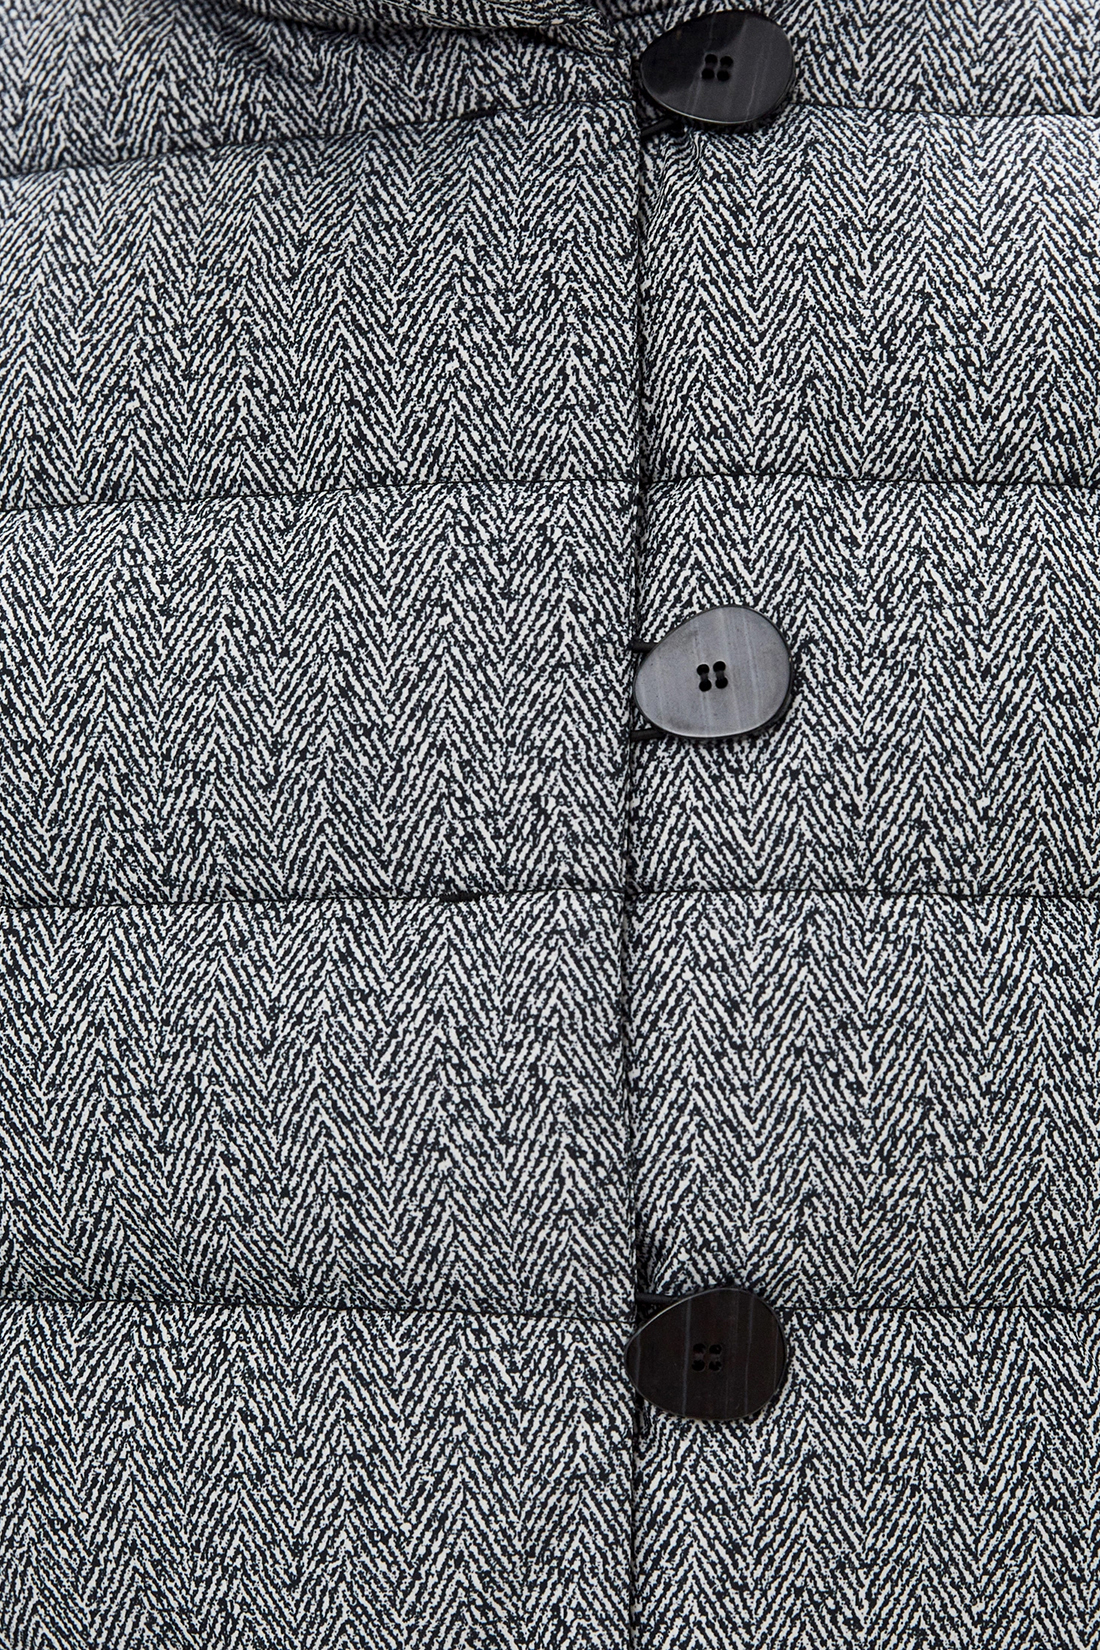 Пуховик (арт. baon B000583), размер L, цвет черный Пуховик (арт. baon B000583) - фото 3